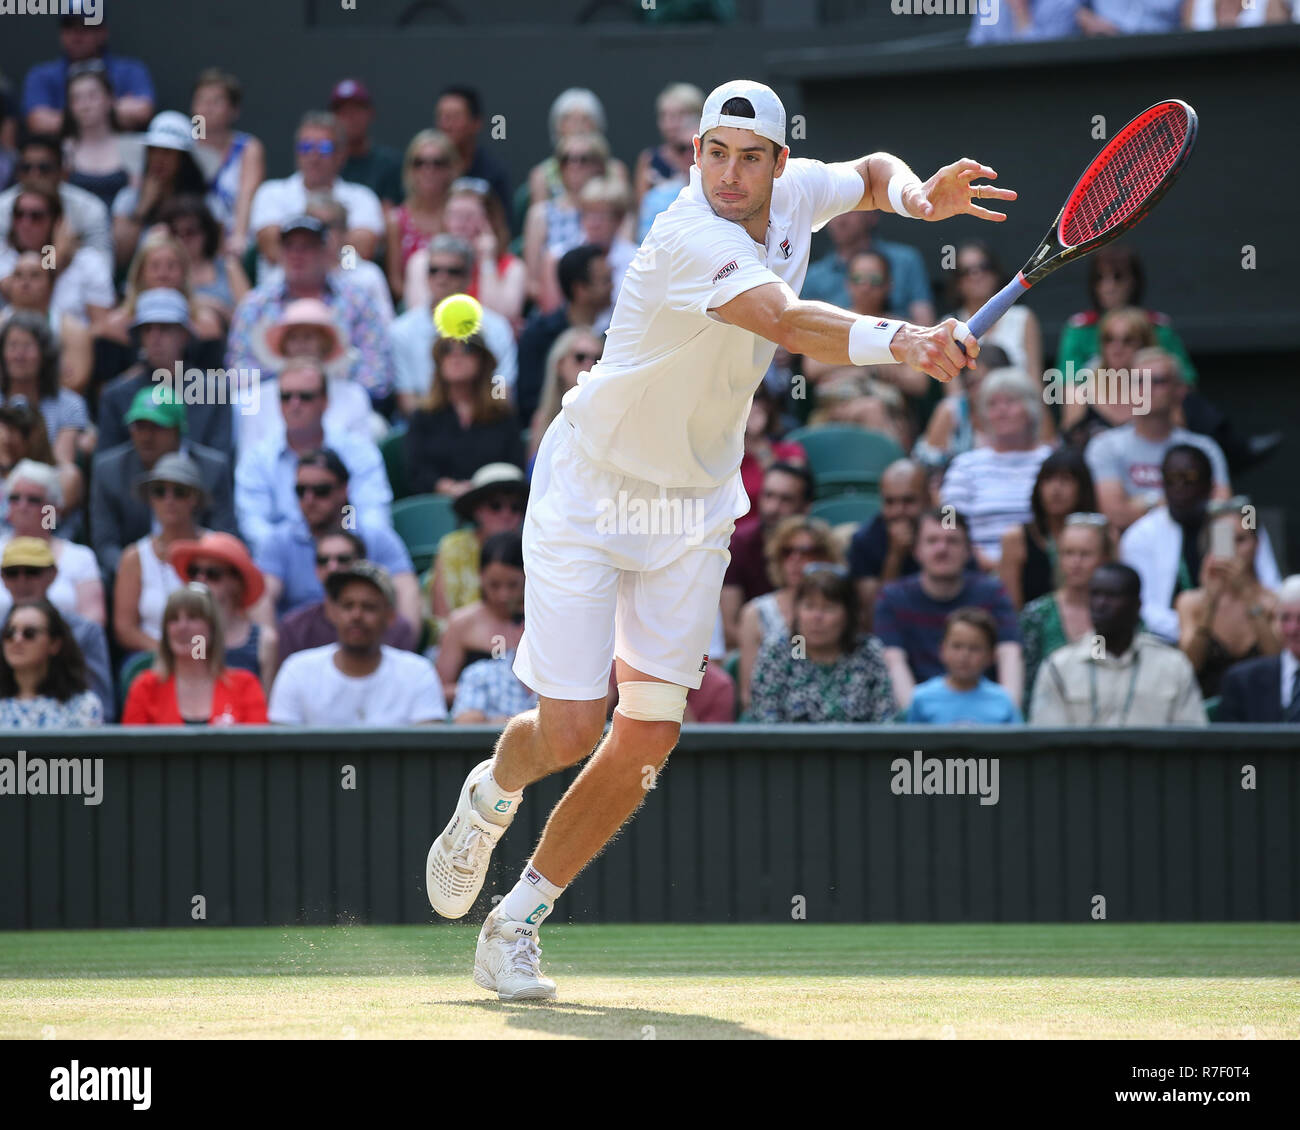 US player John Isner in action at Wimbledon,London, United Kingdom. Stock Photo